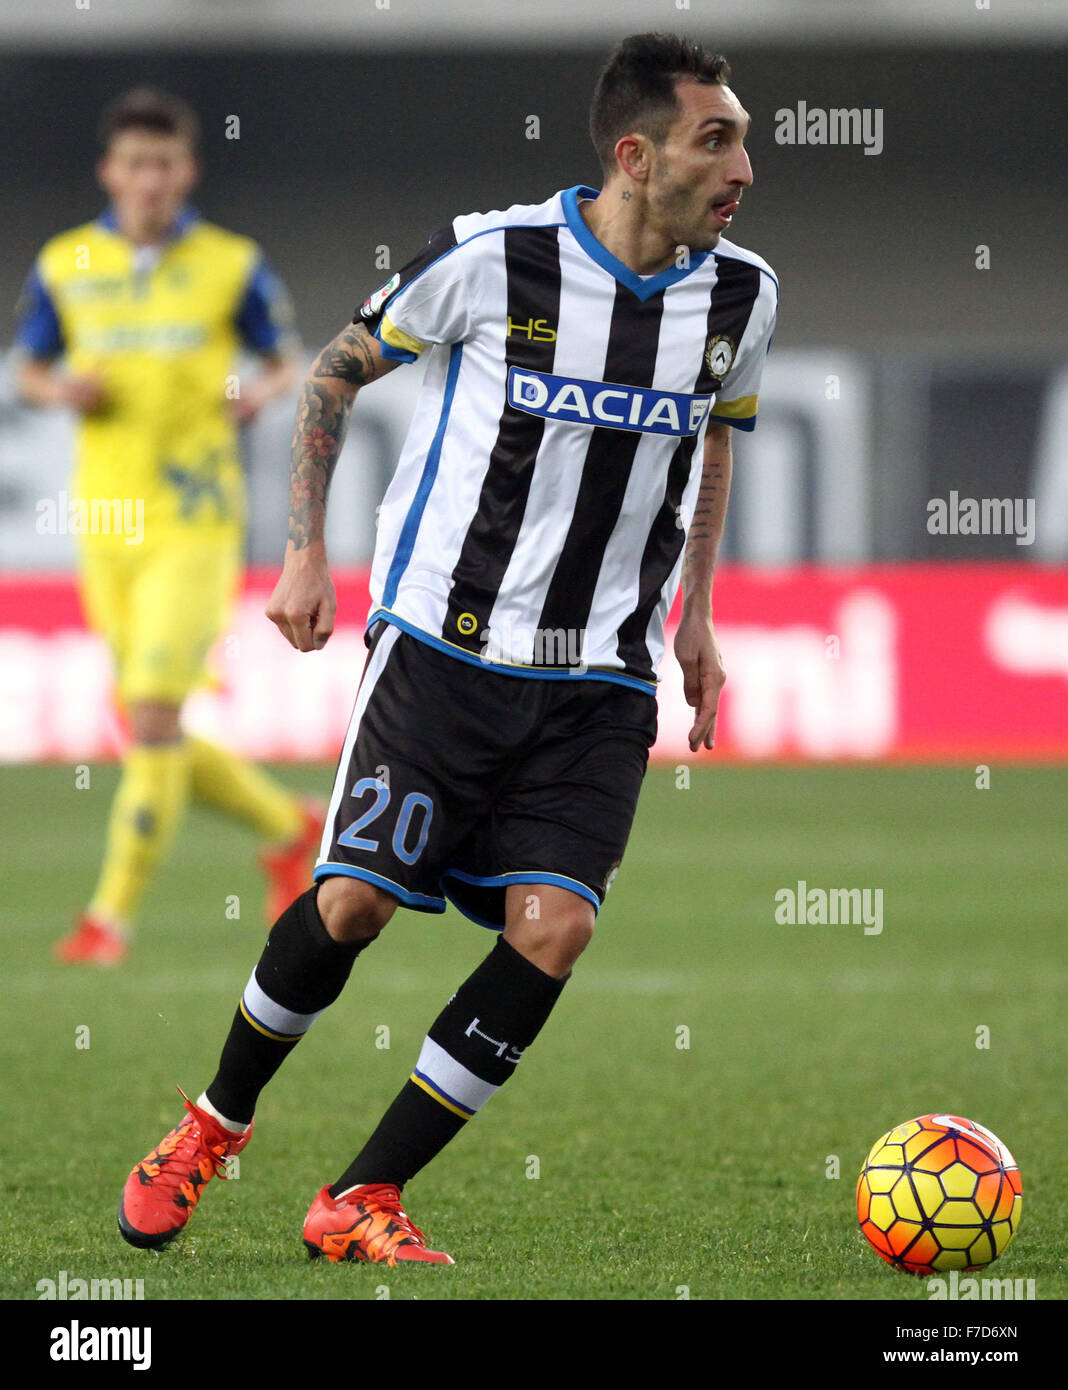 Francesco Lodi - Player profile